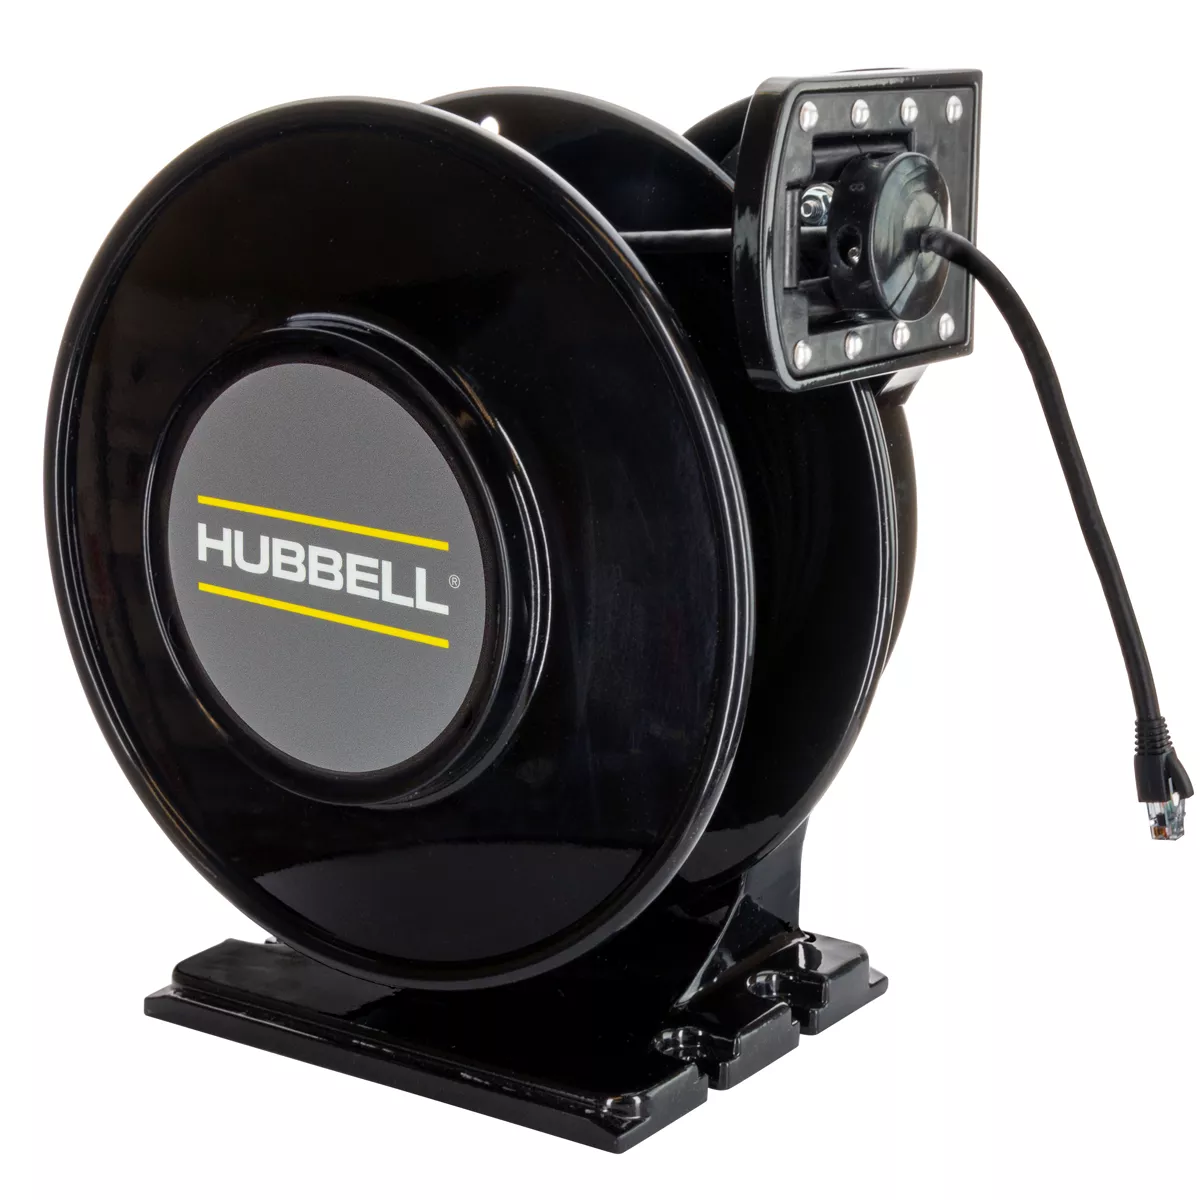 Hubbell Cord Reel Won't Retract Fix HBLC40123TT by Chuck